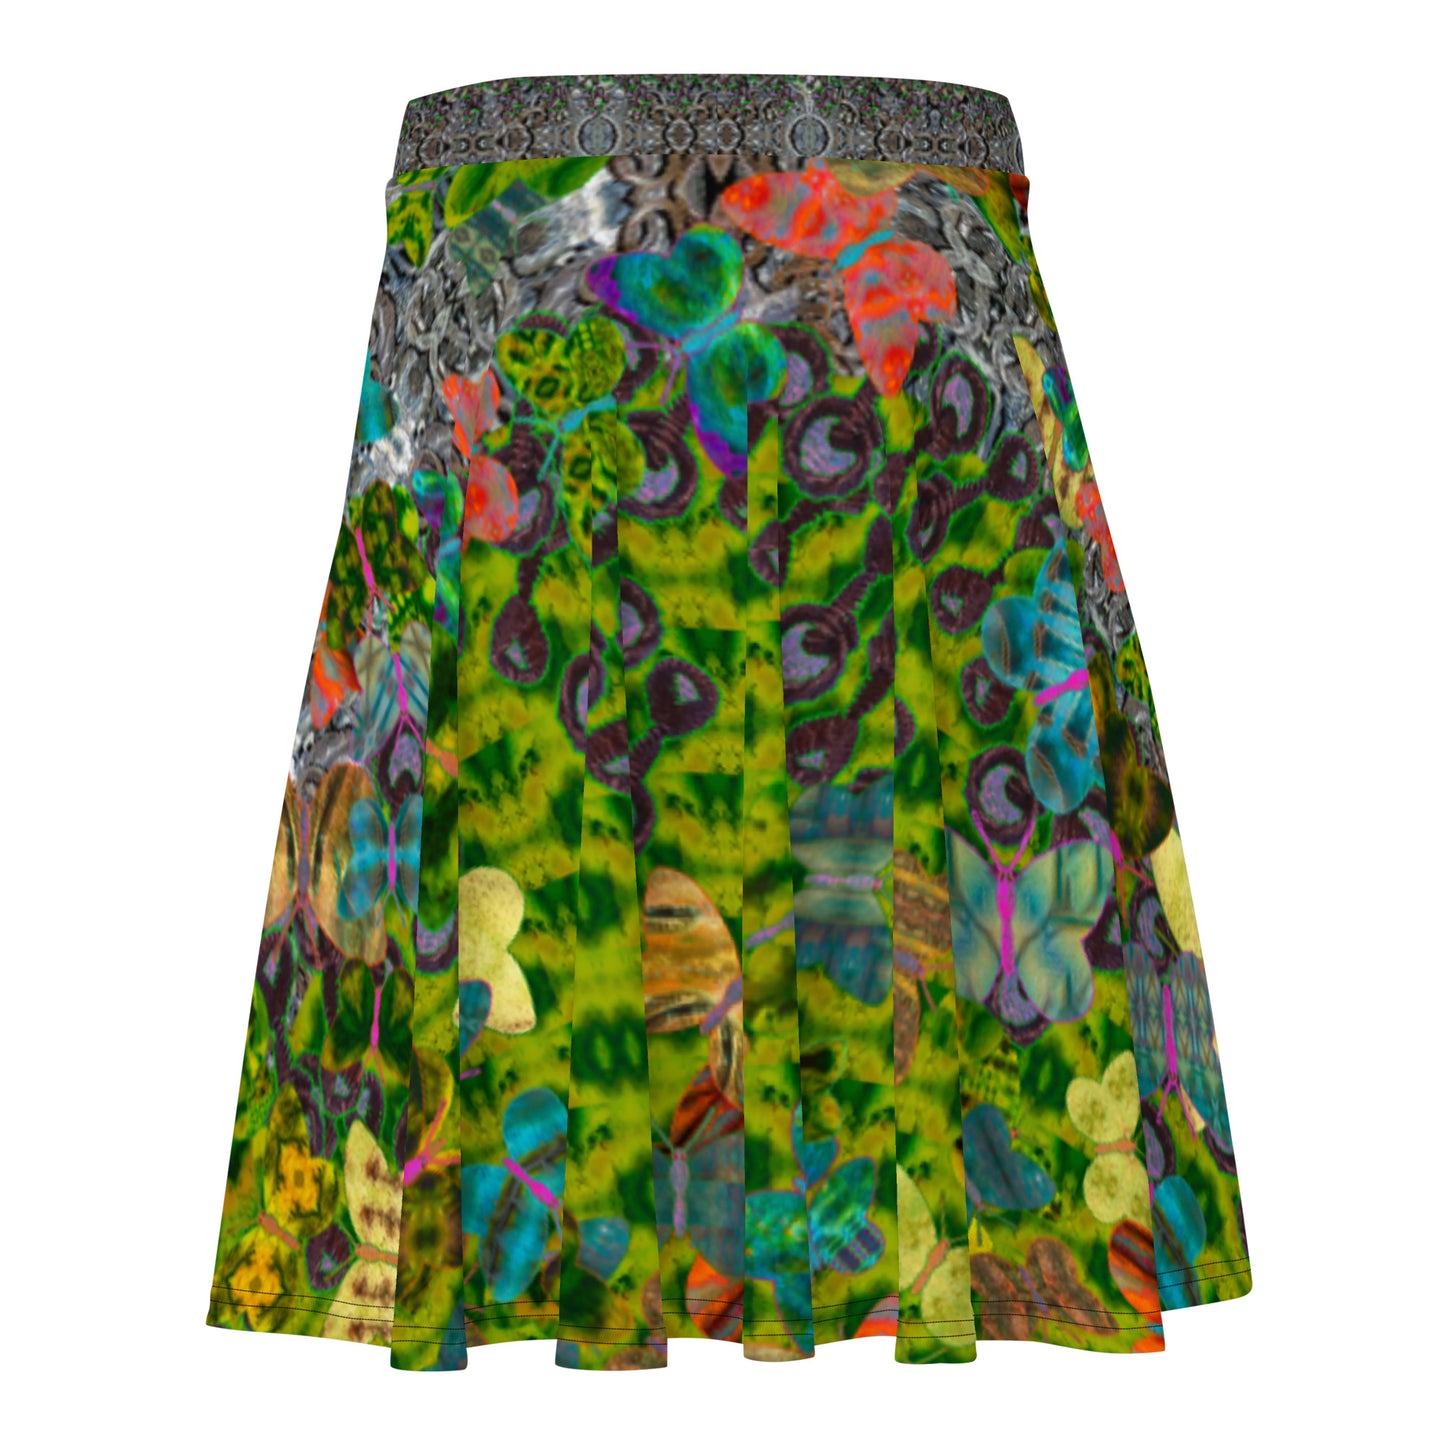 Skater Skirt (Her/They)(Butterfly Glade Shoal Solstice GNHV 8.5) RJSTH@Fabric#5 RJSTHw2021 RJS